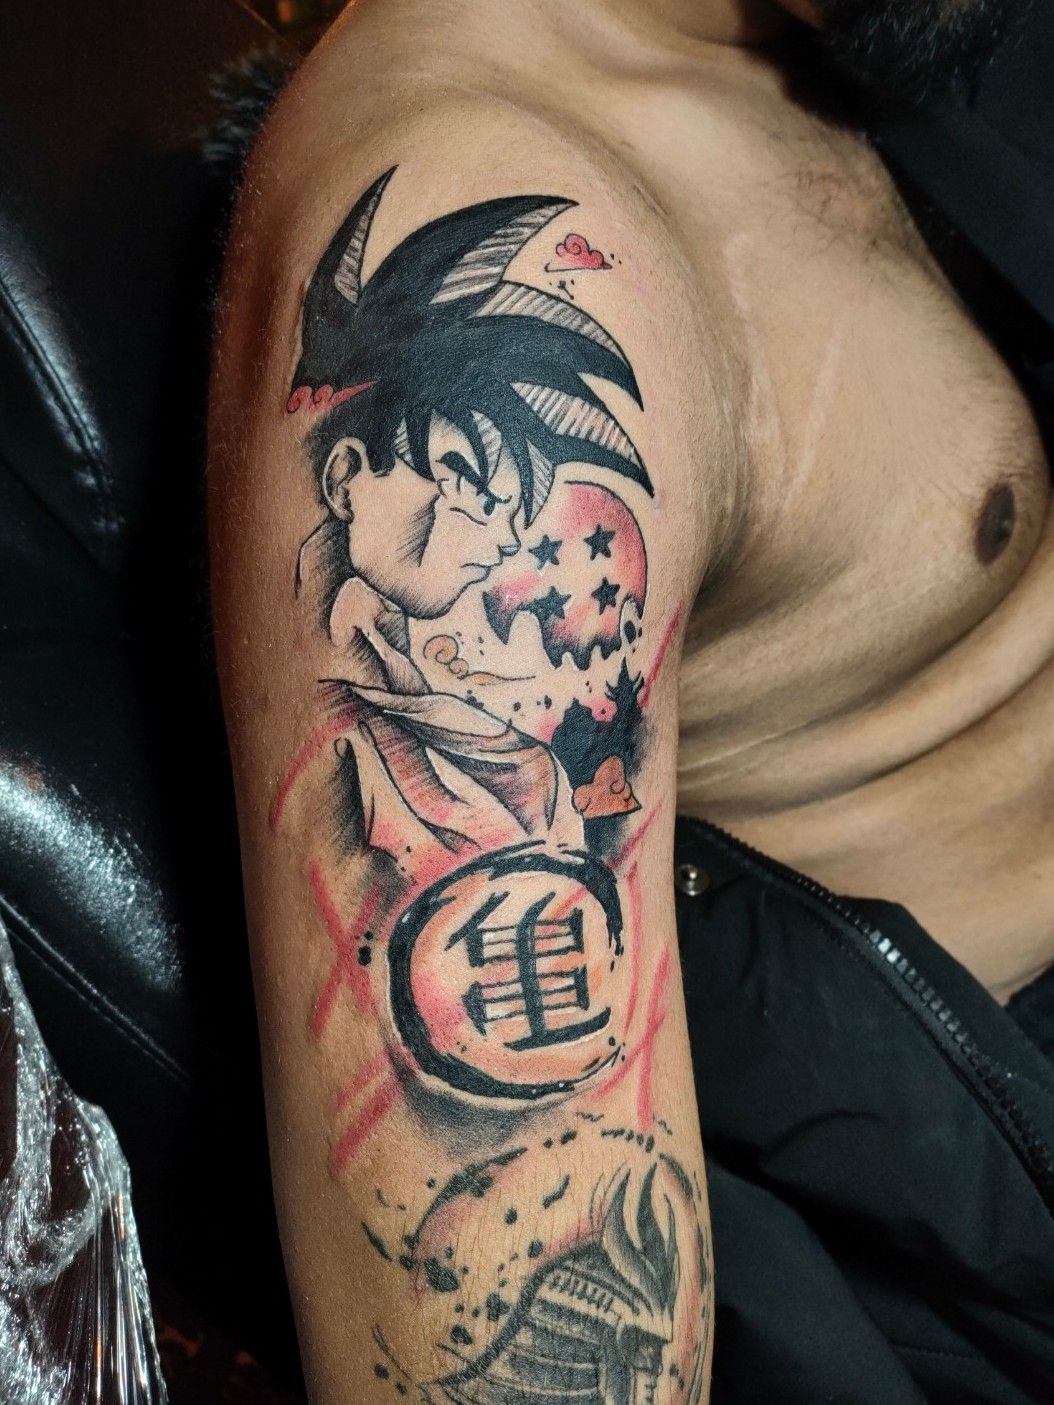 25 Minimalist Dragon Ball Z Tattoos That Subtly Pay Homage